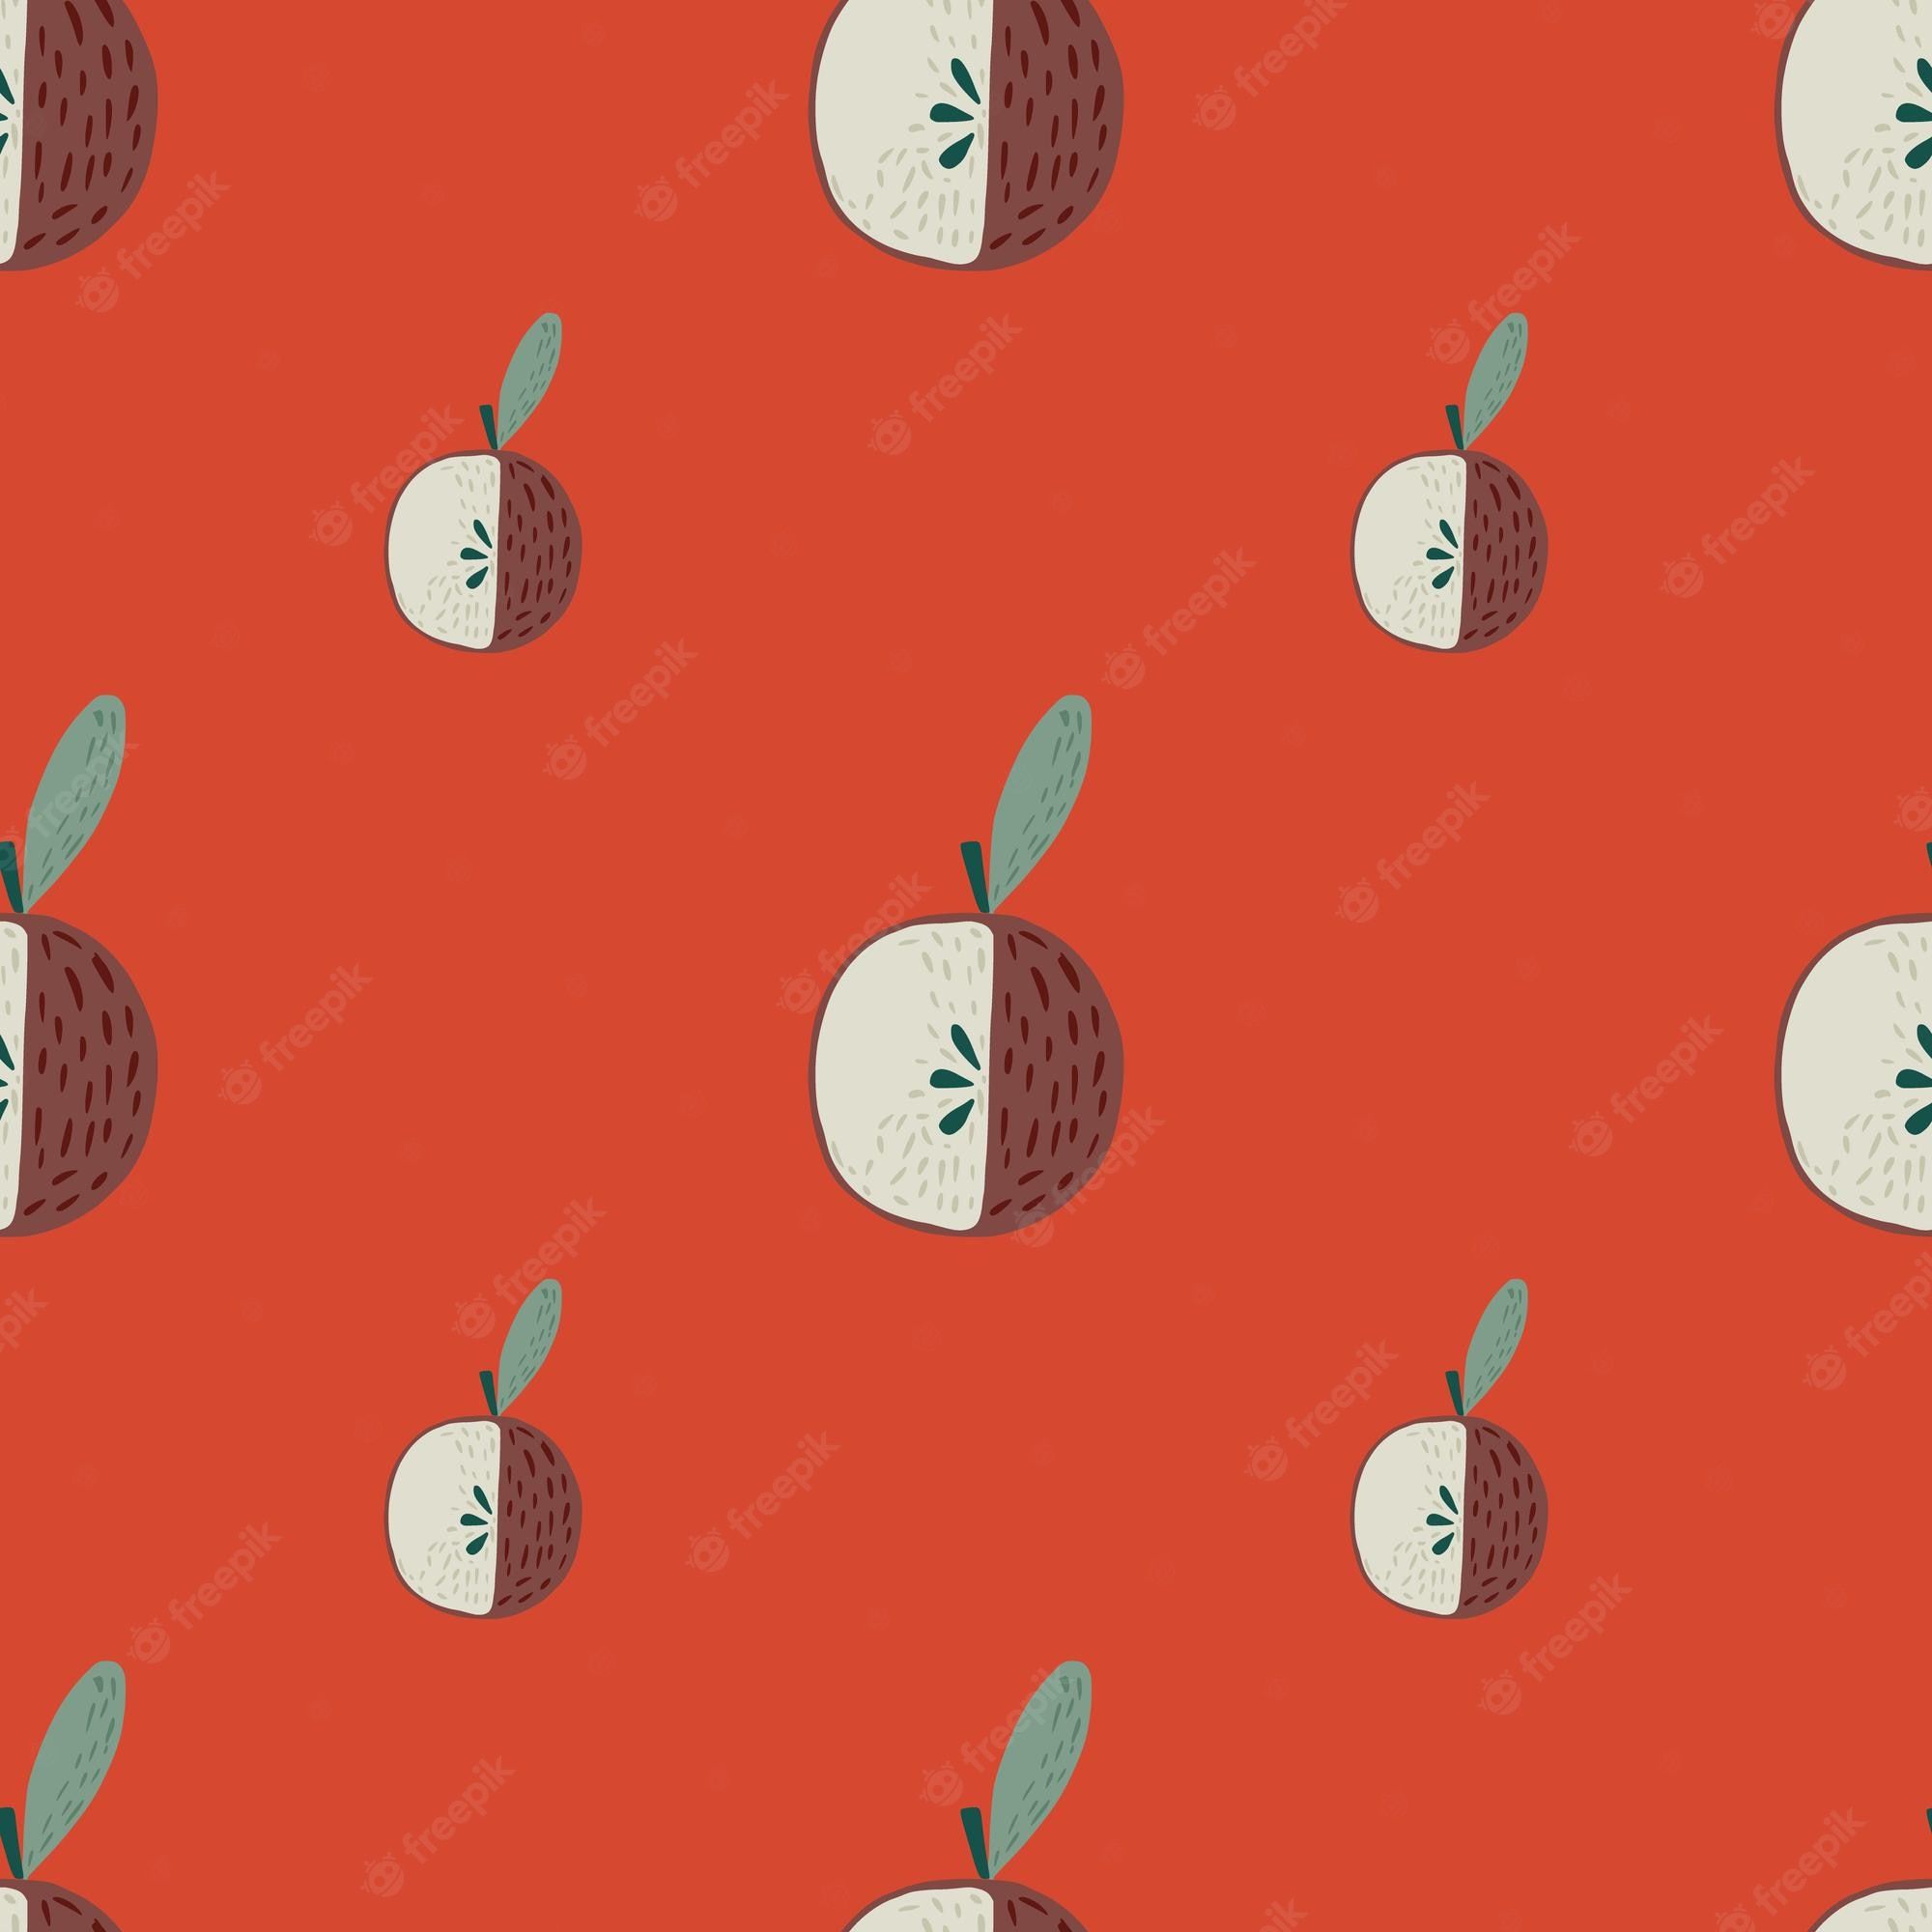 Cute fruit wallpaper Image. Free Vectors, & PSD